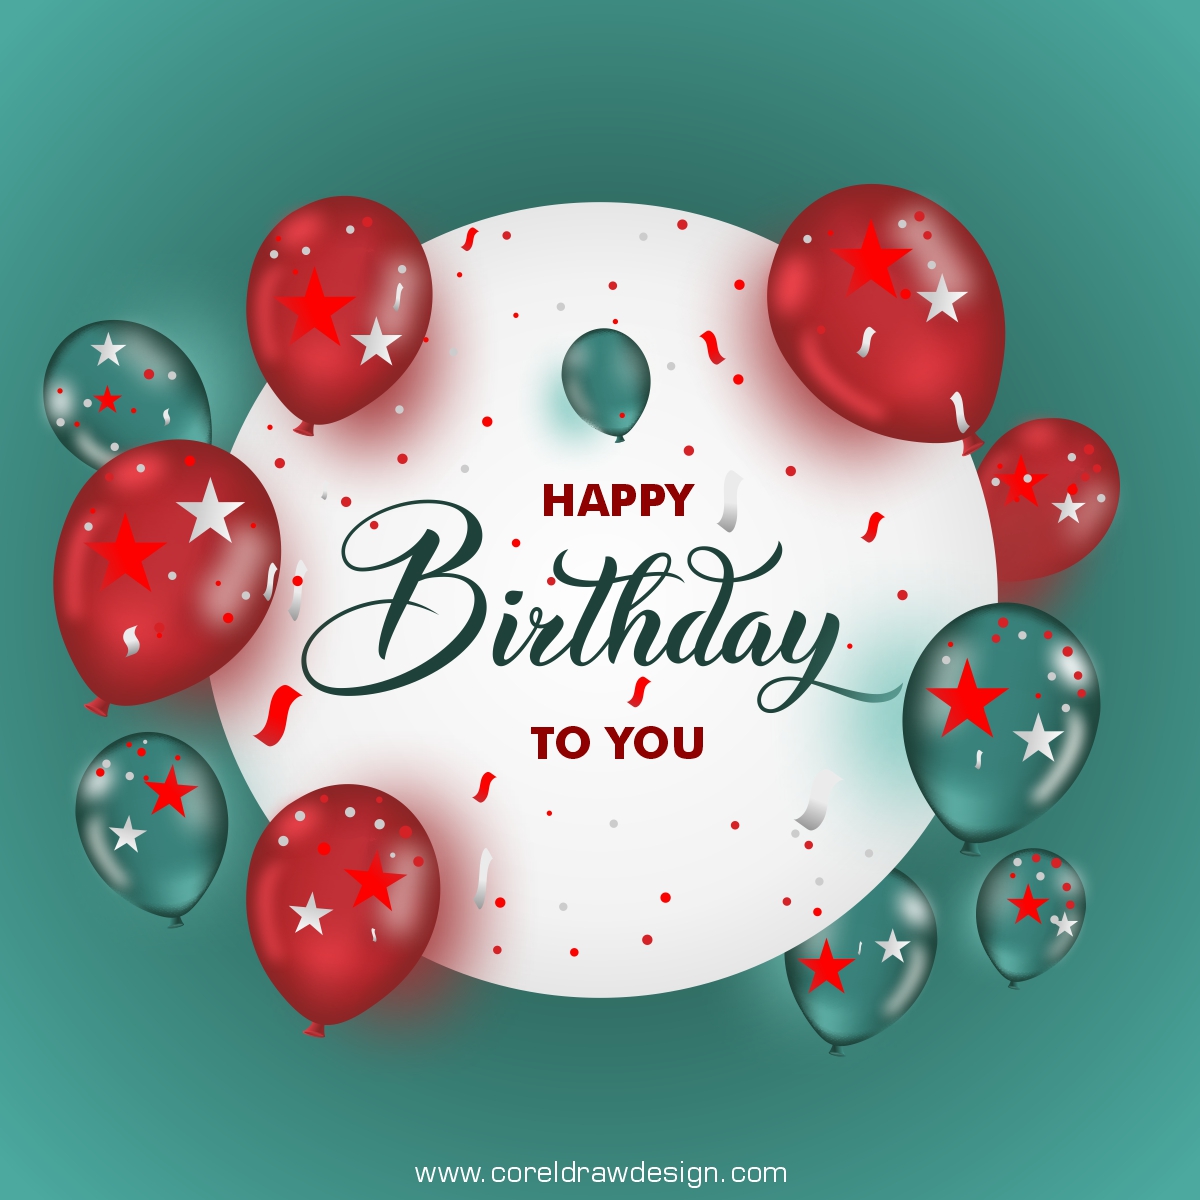 Happy Birthday Gold And Black Celebration Background Design Stock  Illustration  Download Image Now  iStock